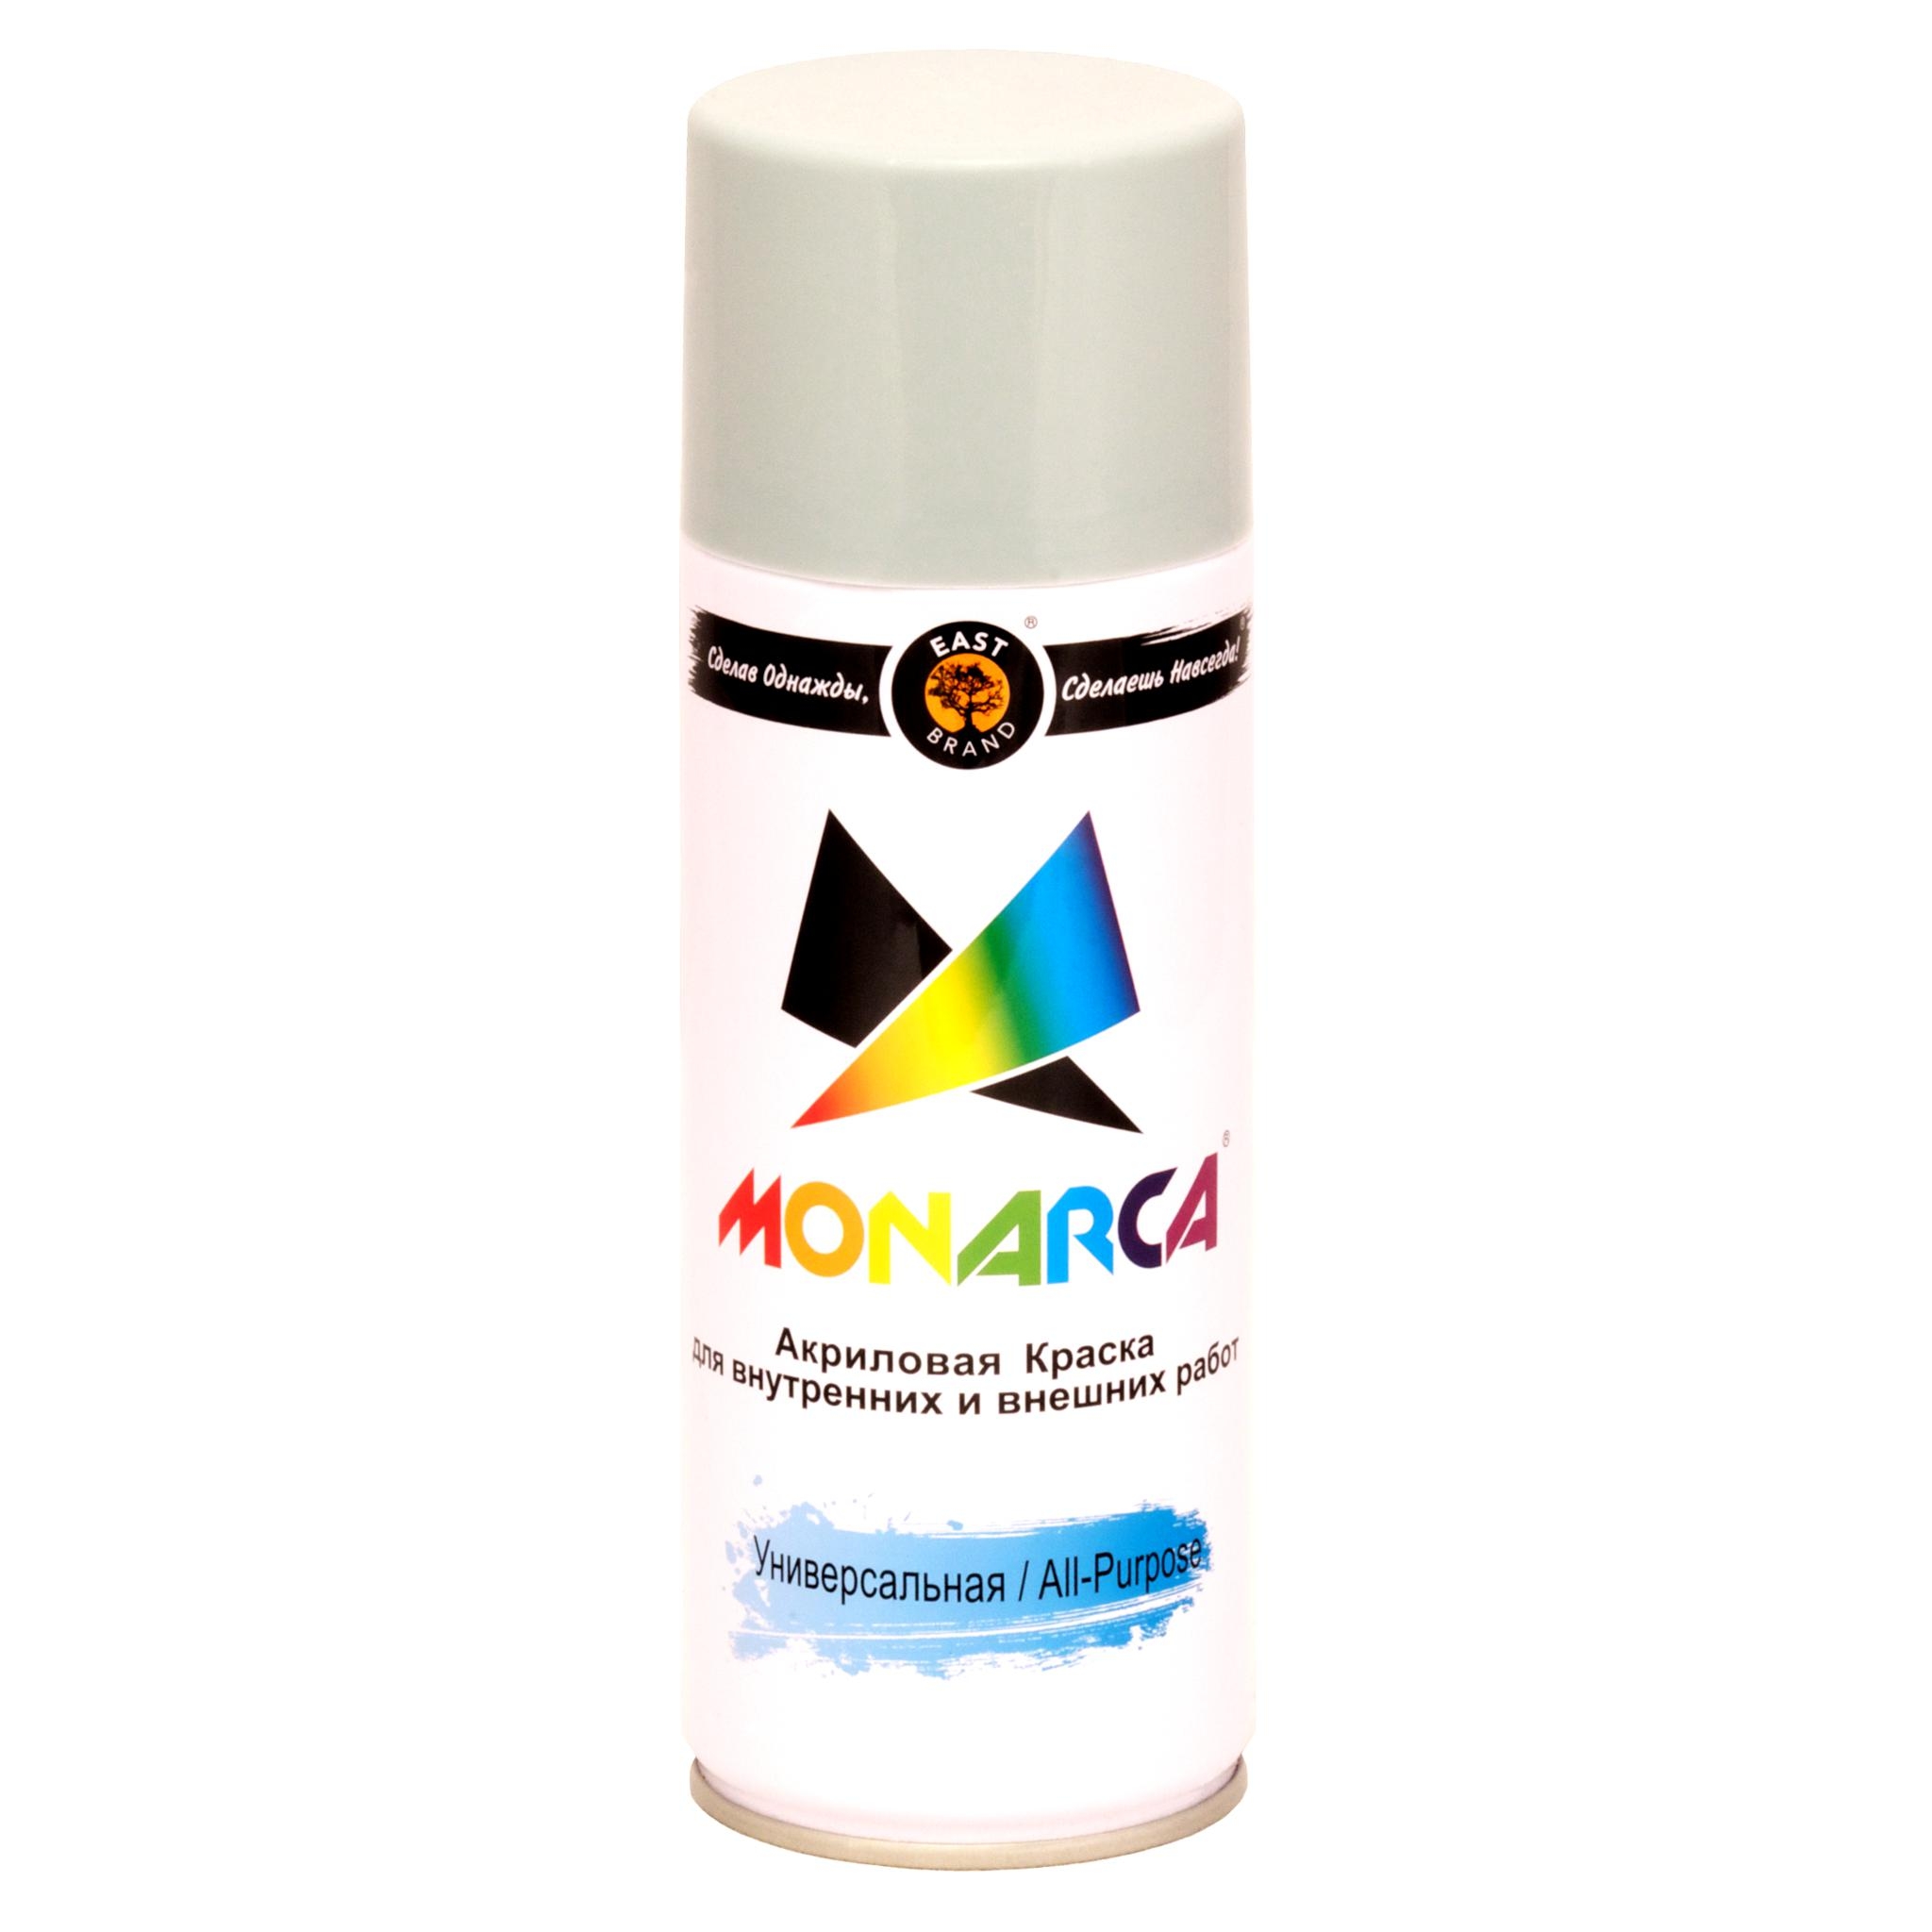 Аэрозольная краска MONARCA 17004 RAL7004 520 мл сигнальный серая аэрозольная краска monarca